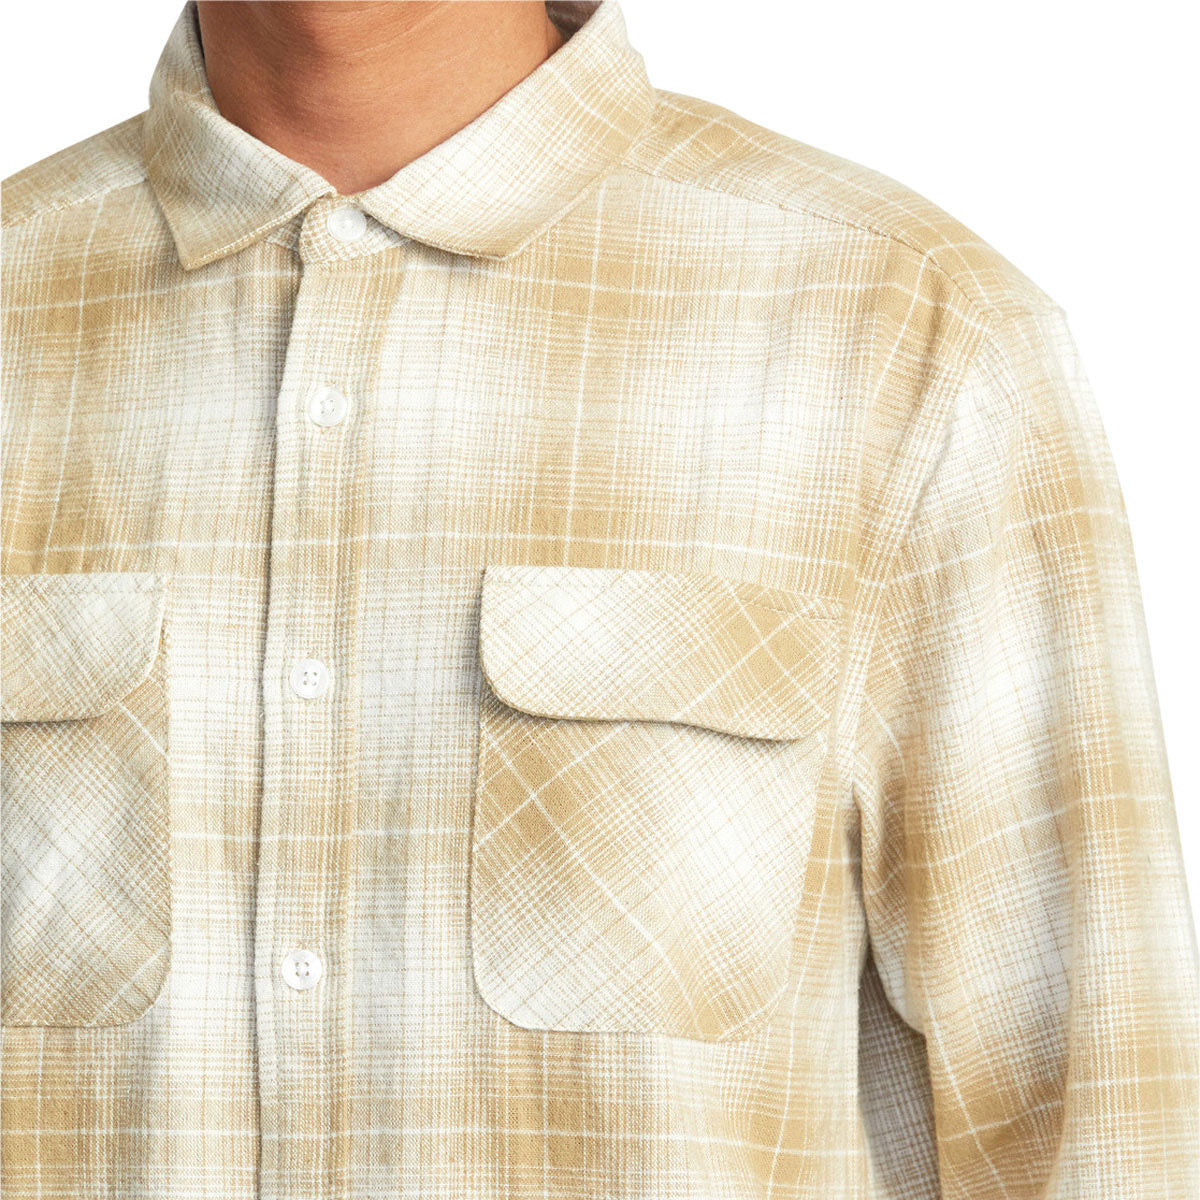 RVCA Dayshift Flannel Long Sleeve Shirt - Khaki image 4